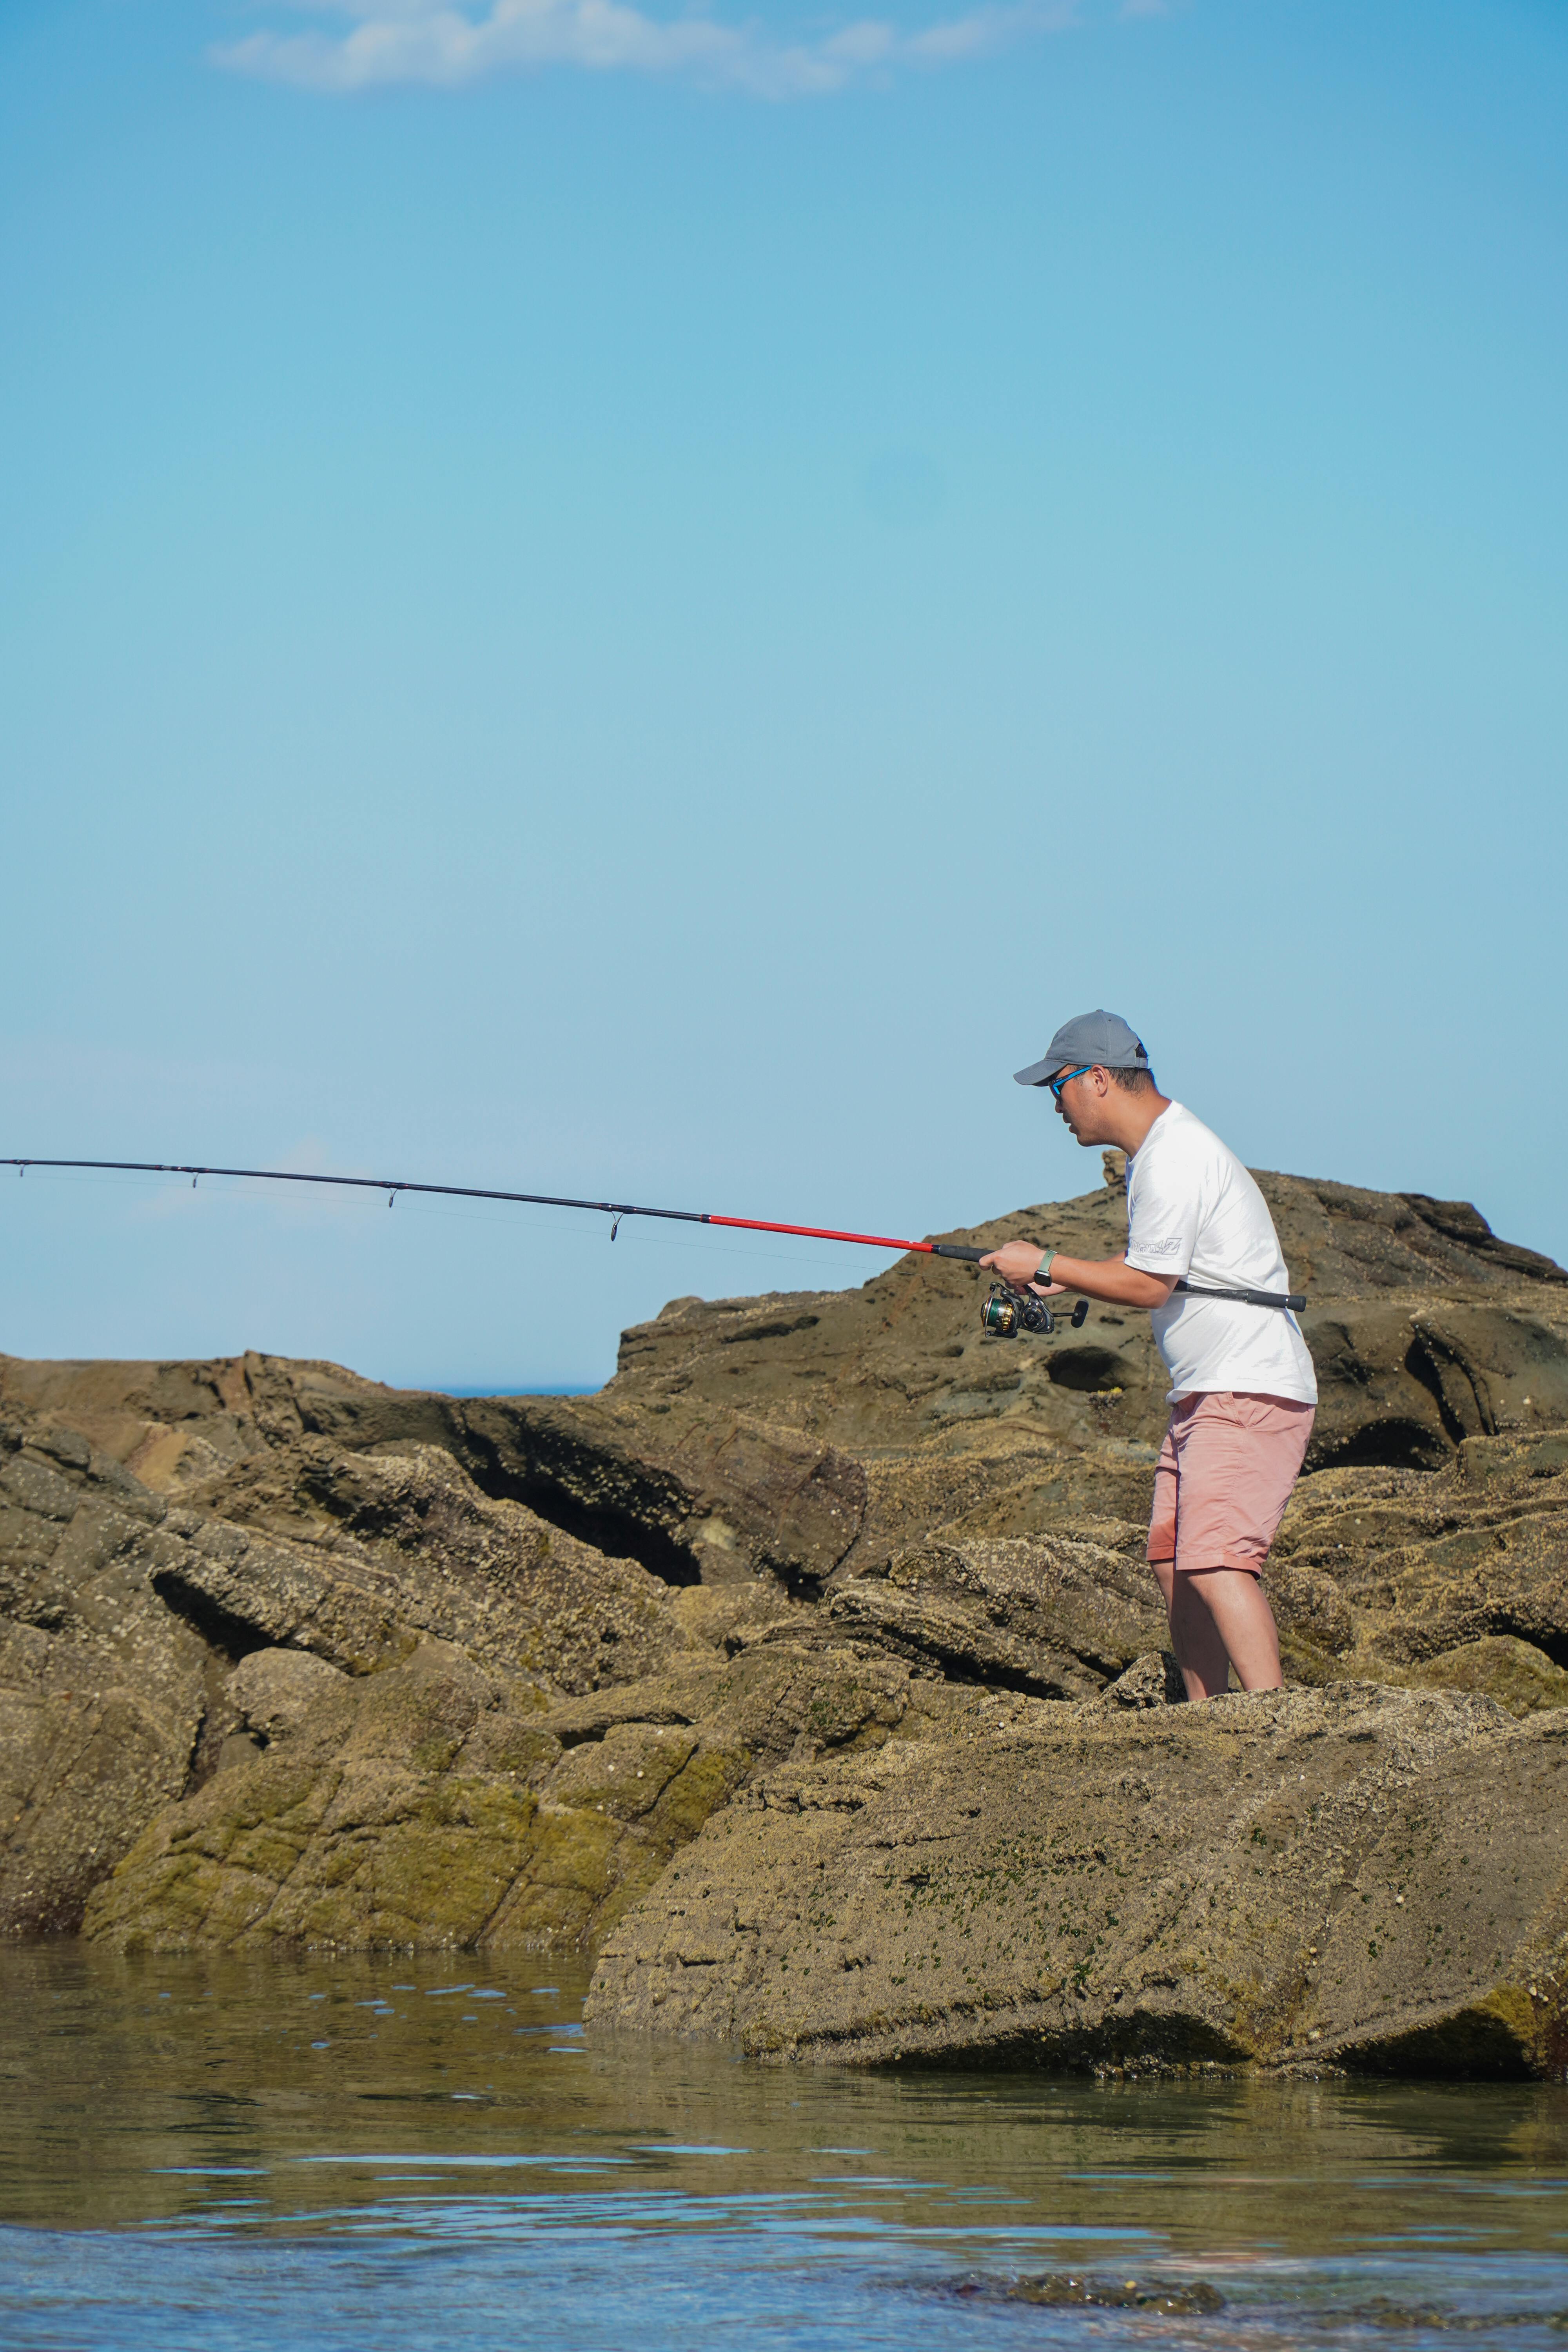 Man with Rod Fishing on Rocks · Free Stock Photo